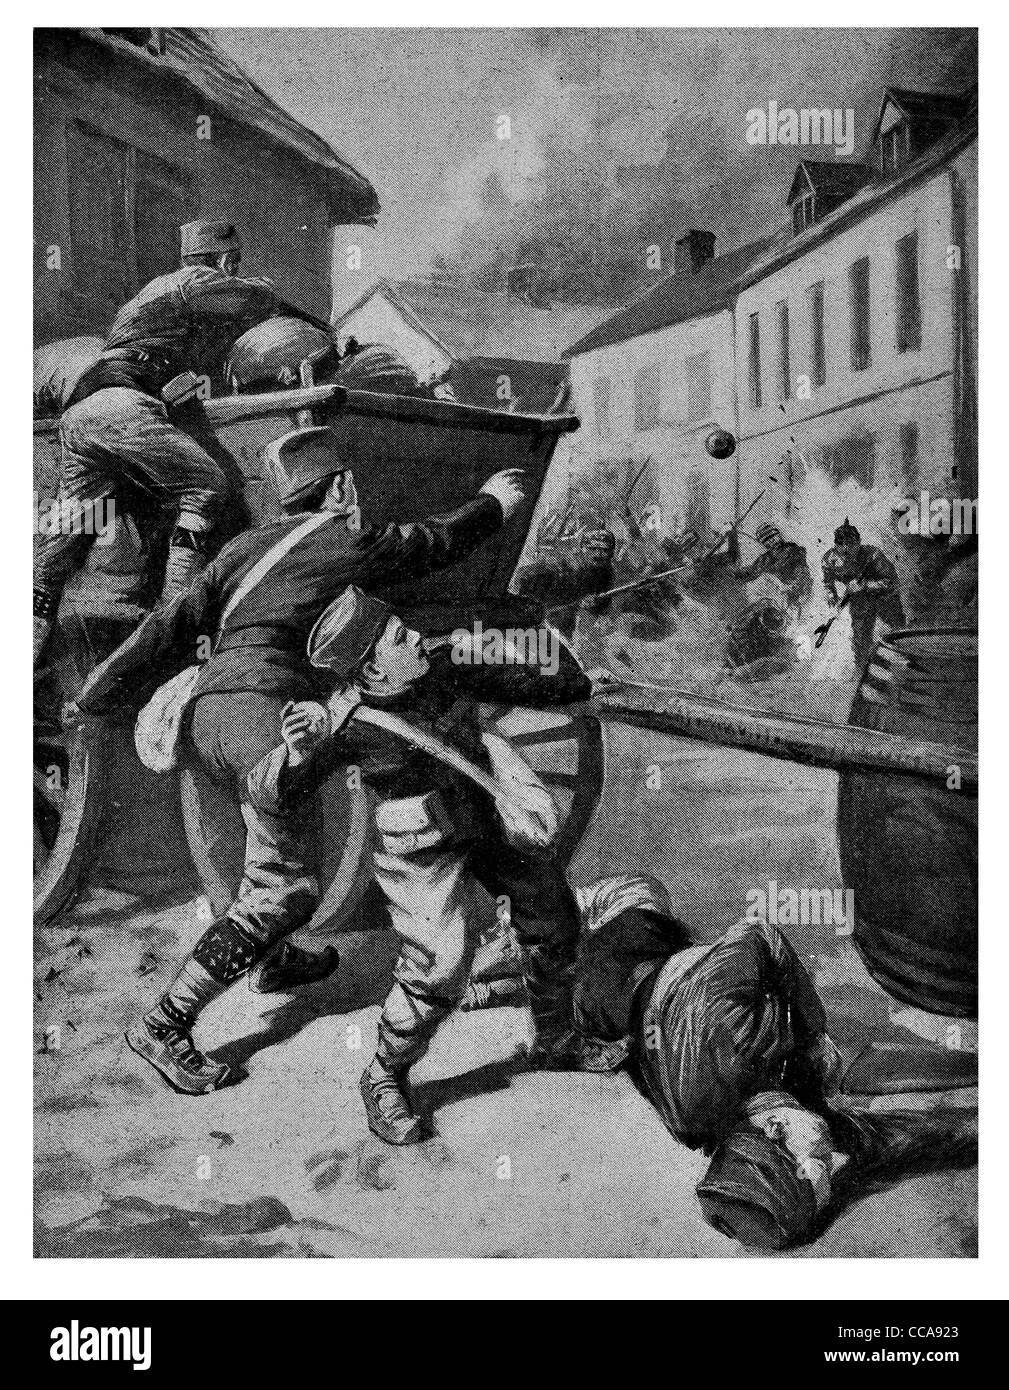 1915 Serbian boy child fighter defend Palanka from Germans barricaded wagon hand grenade brave bravery children Stock Photo